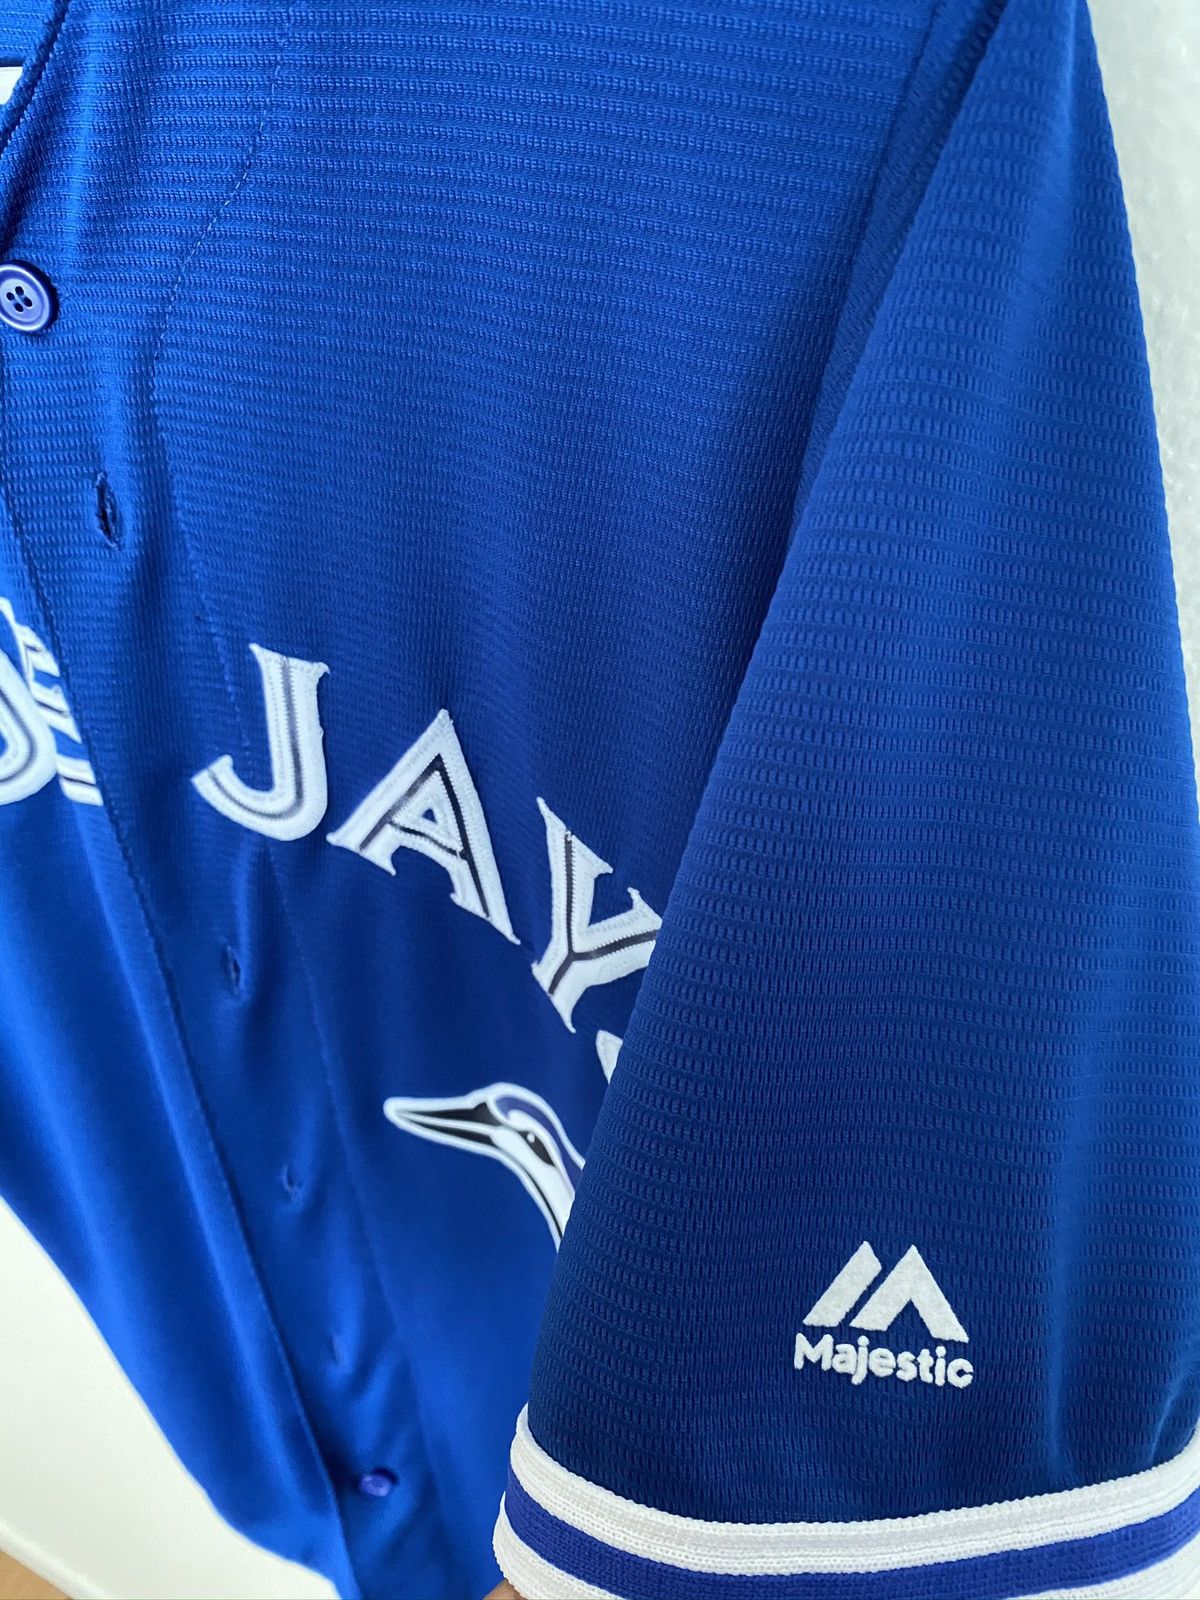 Majestic Blue jays MLB jersey Size US S / EU 44-46 / 1 - 2 Preview